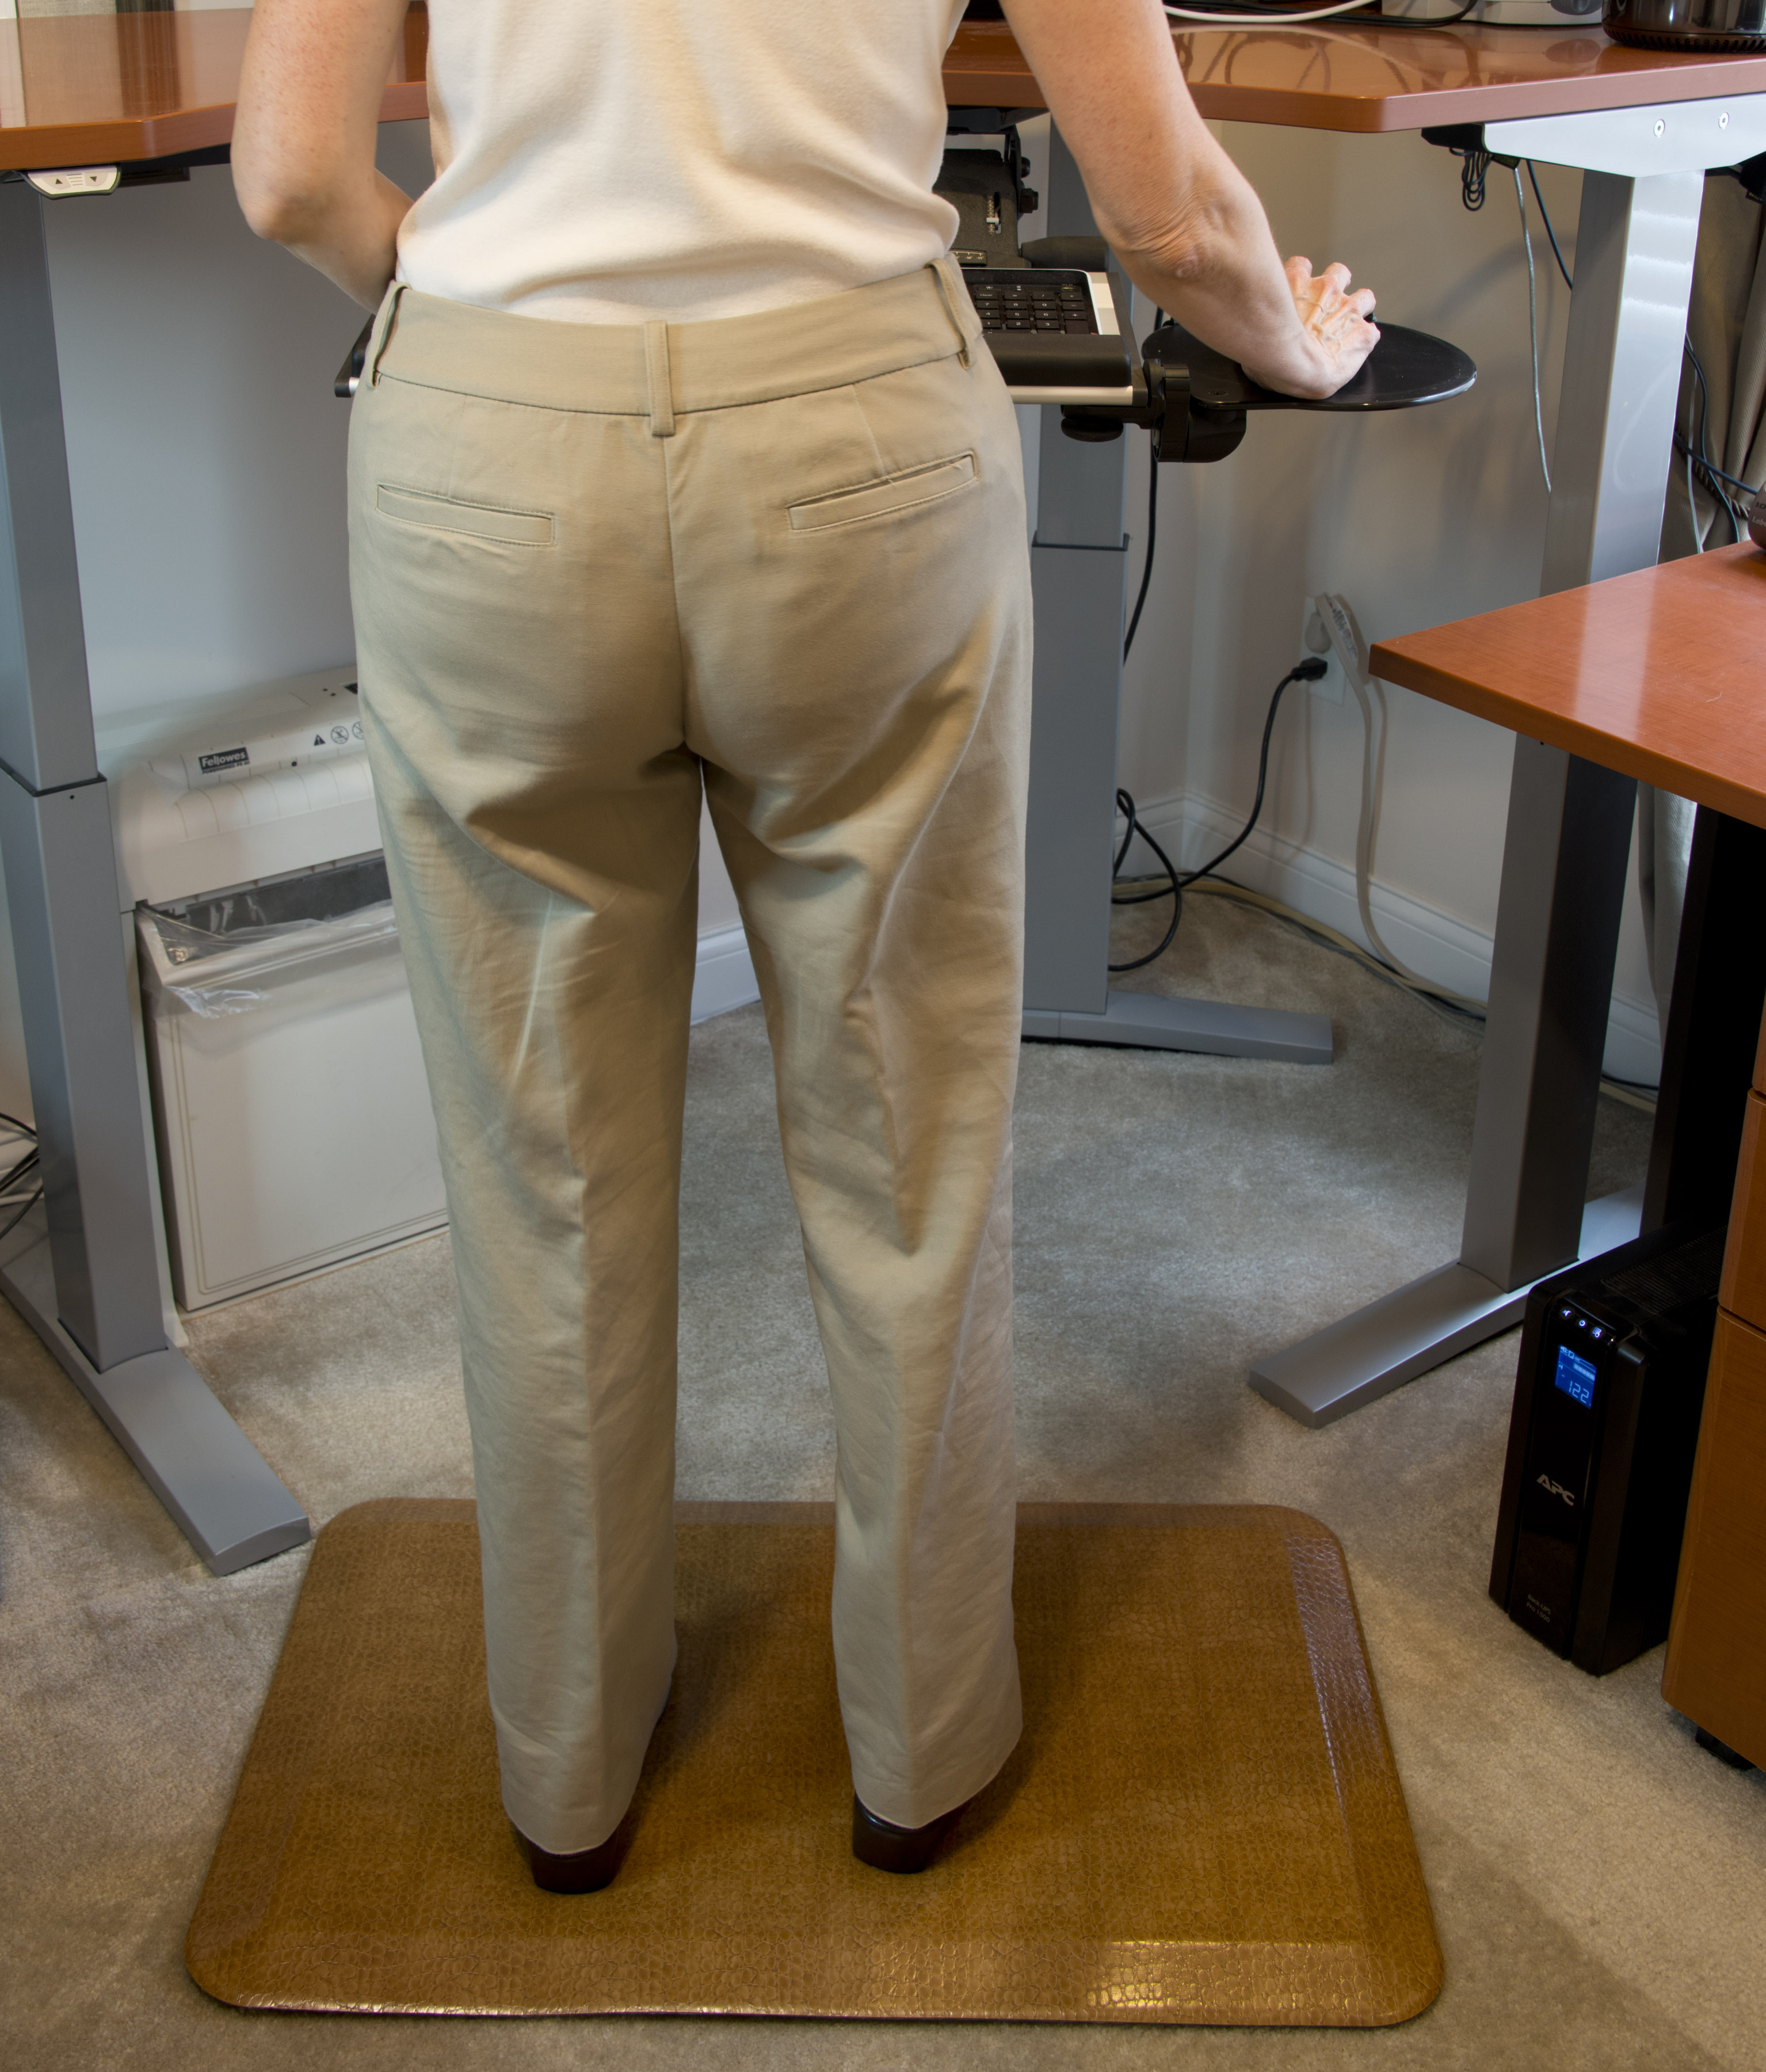 New Standing Desk Anti Fatigue Mats From Martinson Nicholls Reduce